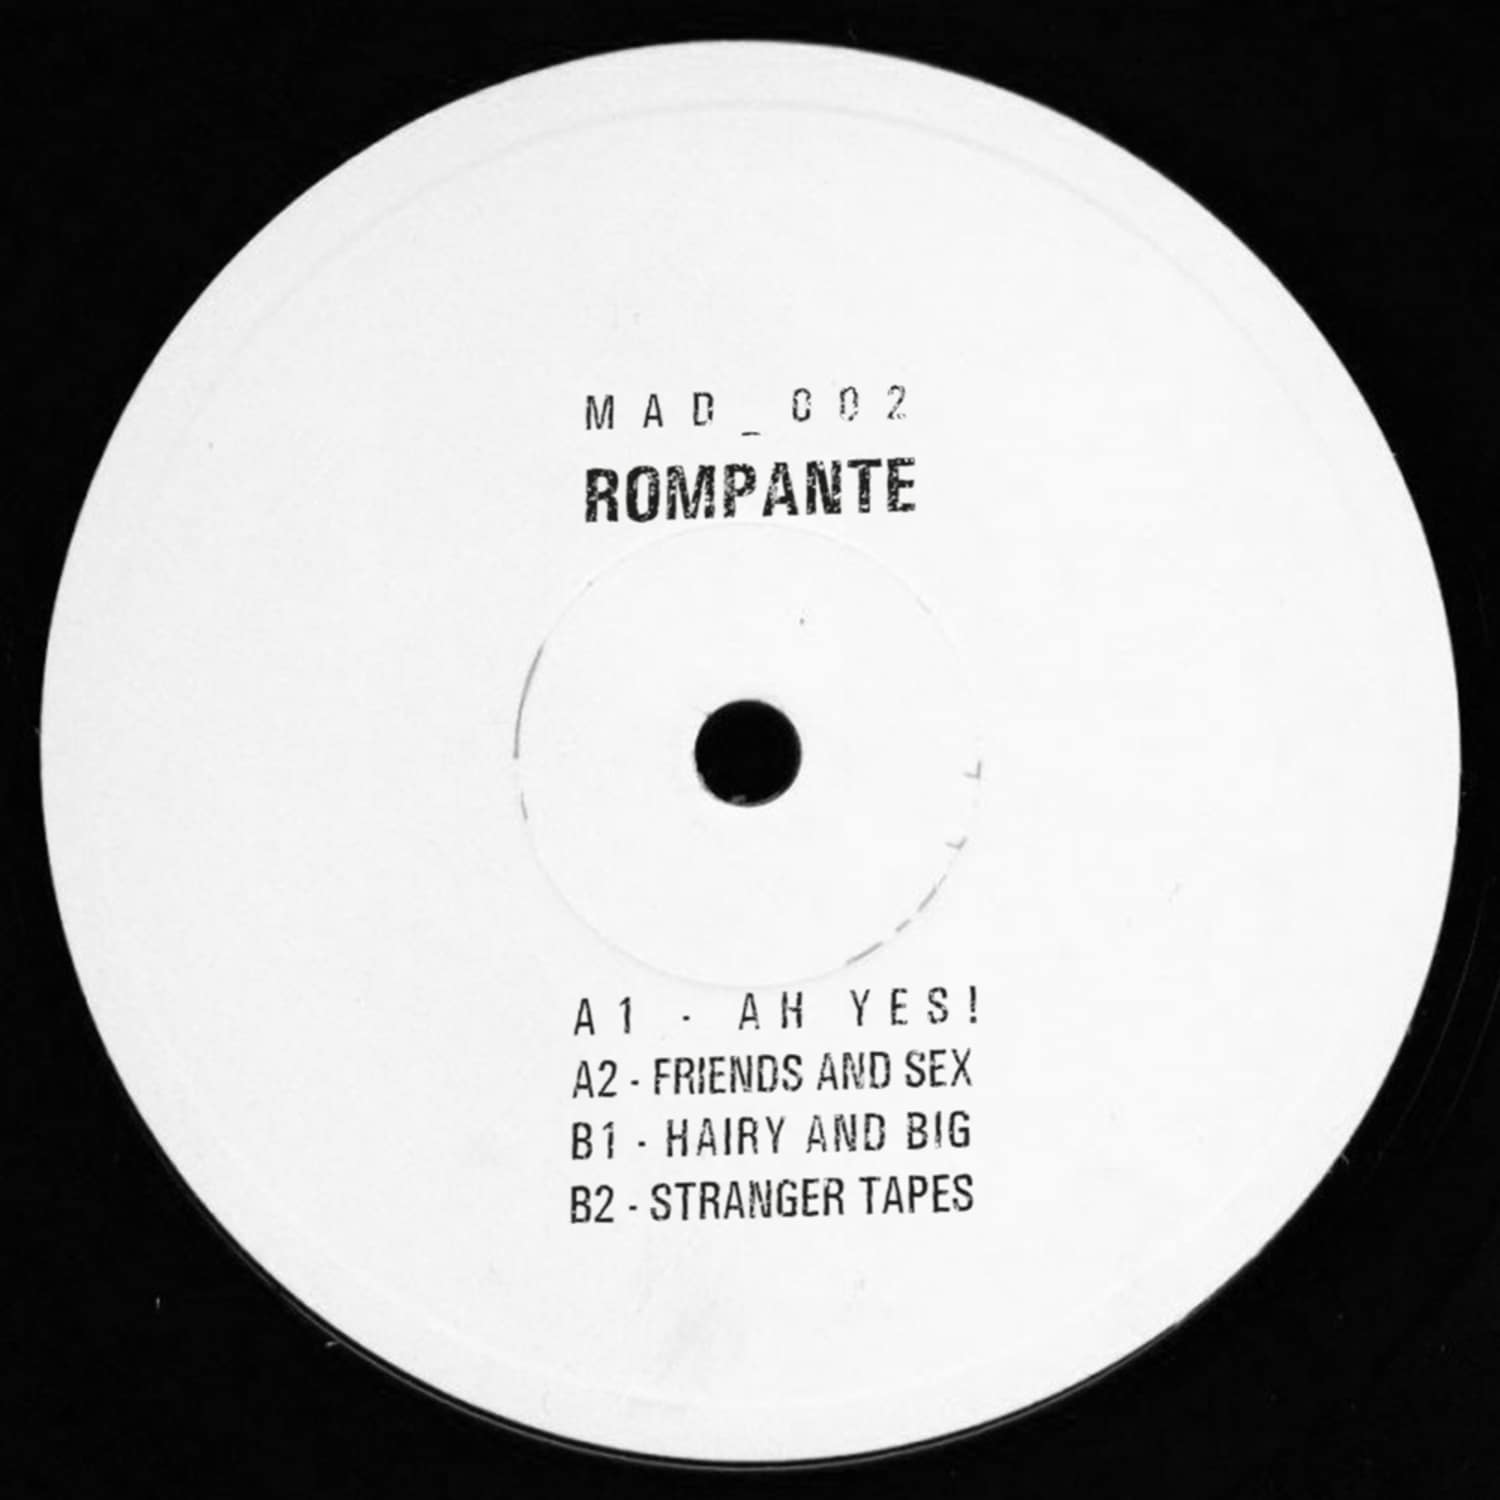 Rompante - MAD002